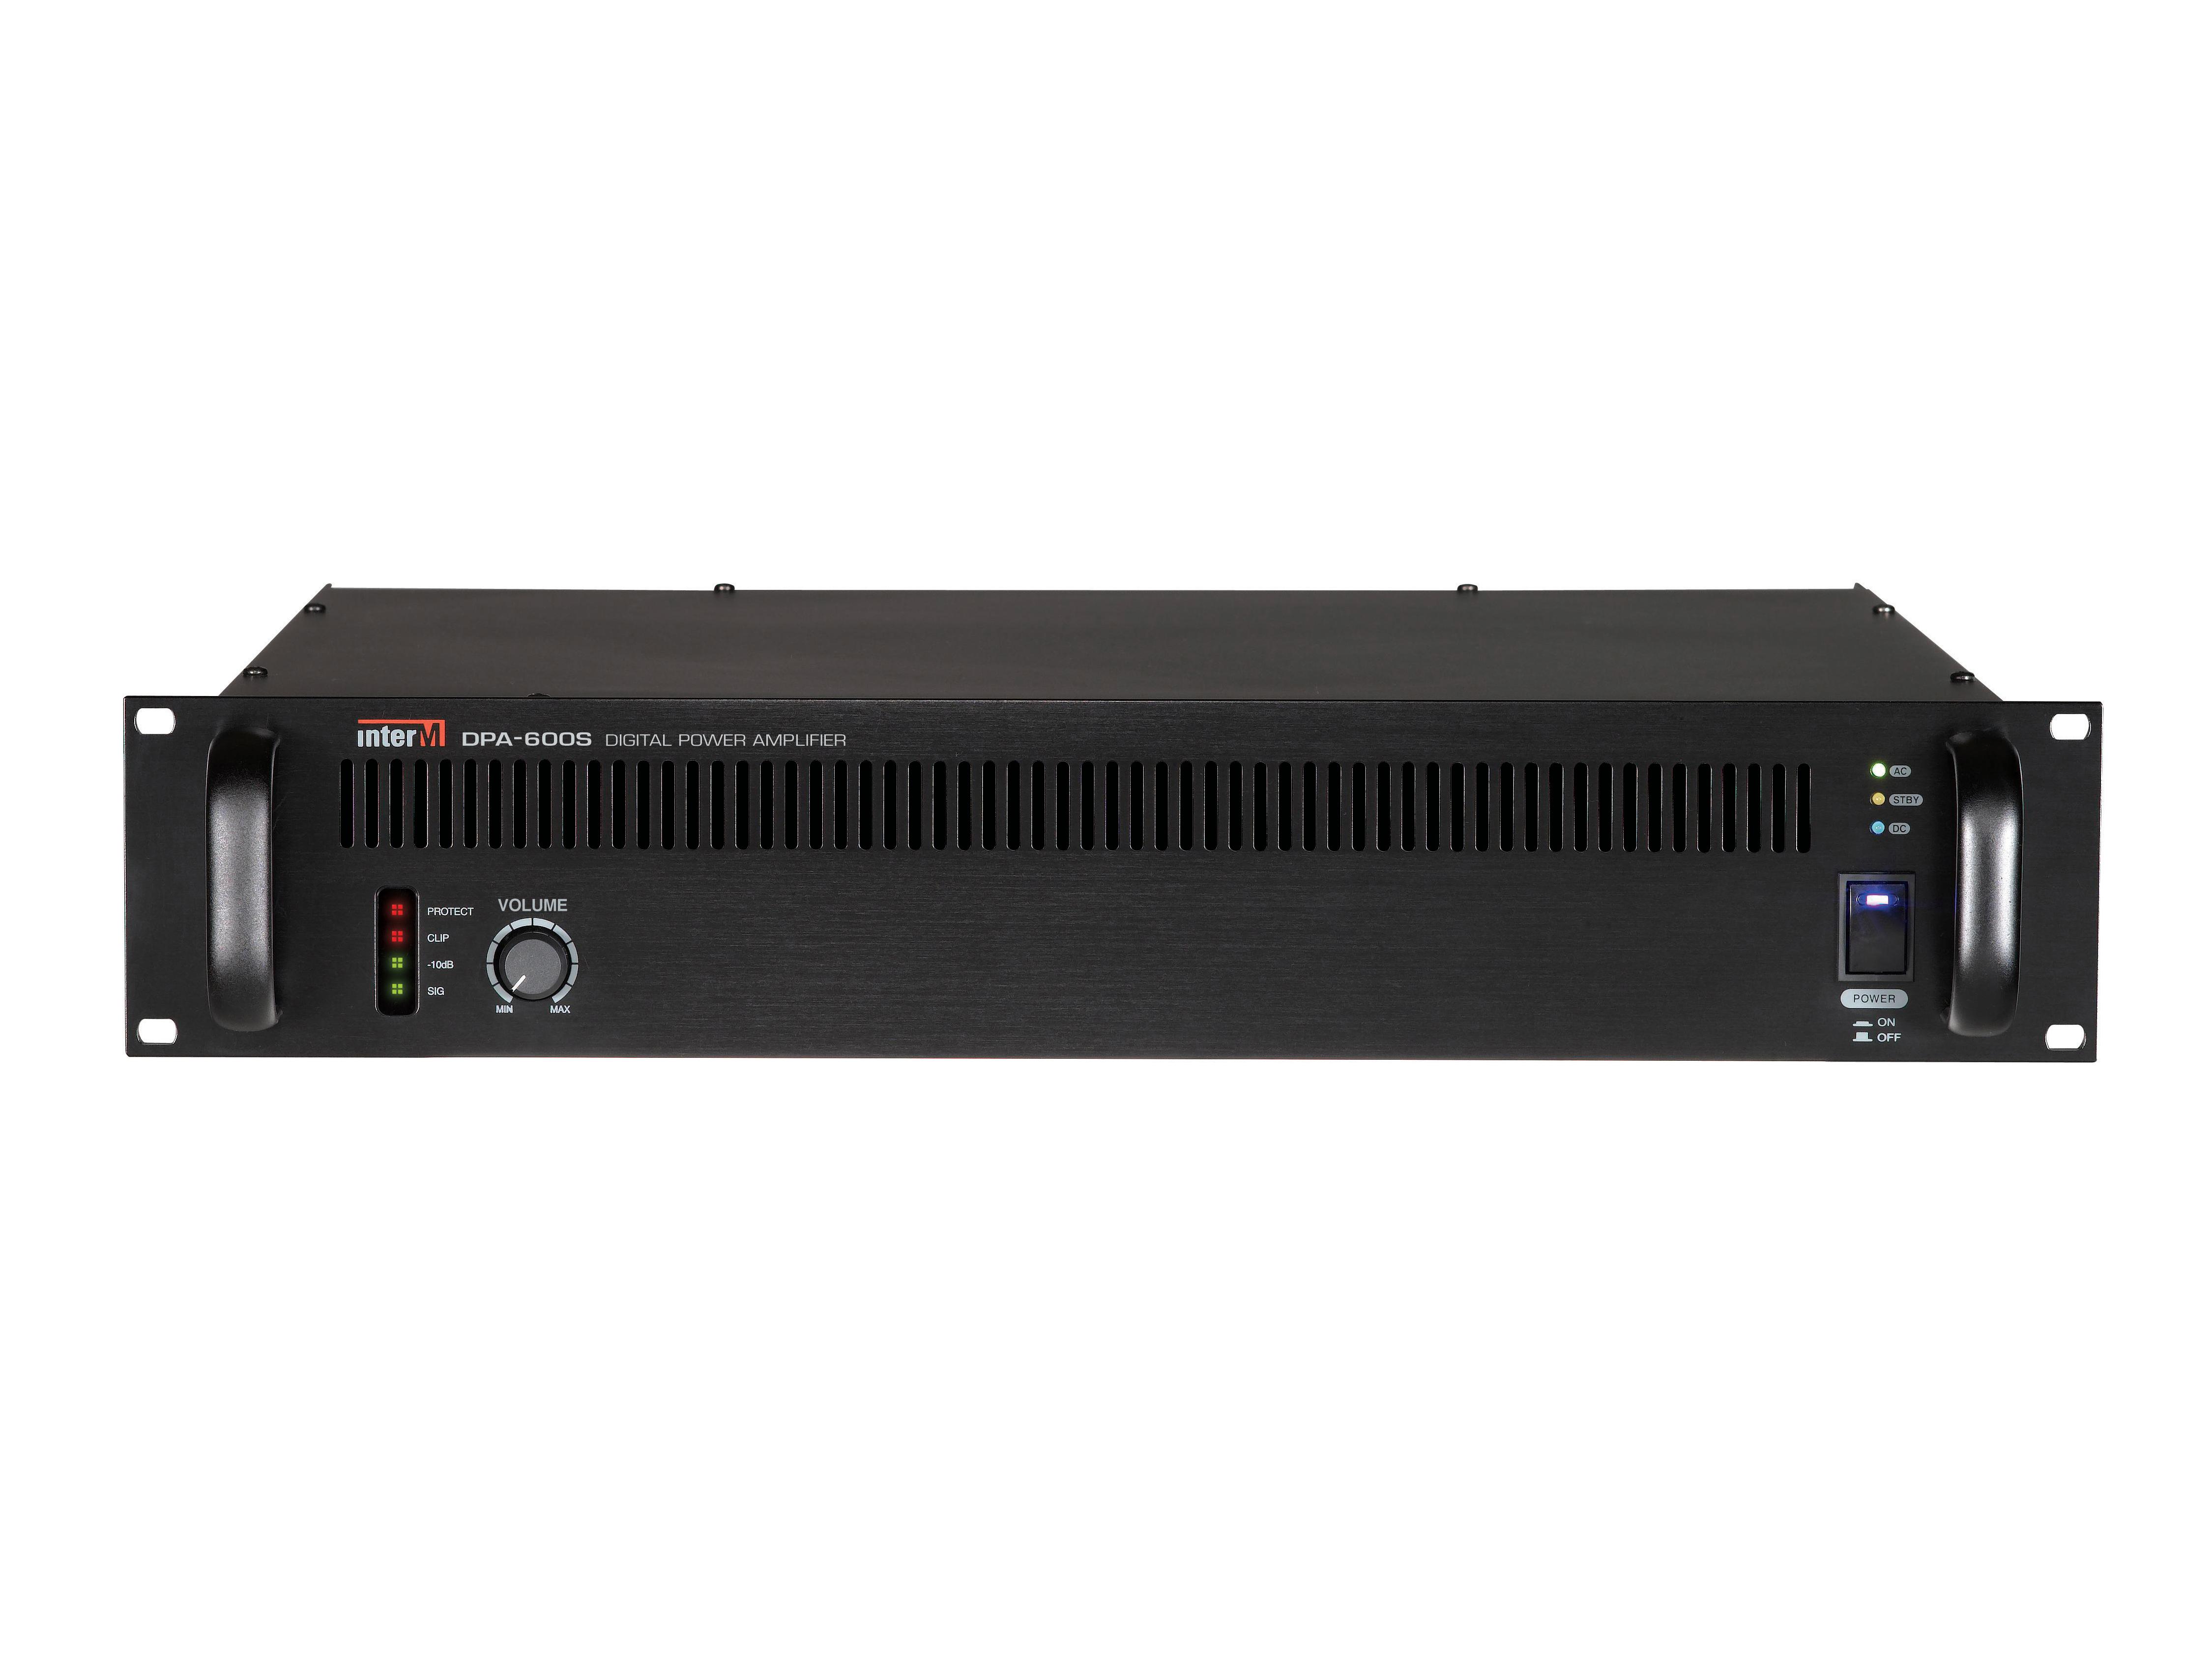 DPA-600S 600W Single Channel Class D Commercial Digital Power Amplifier by Inter-M